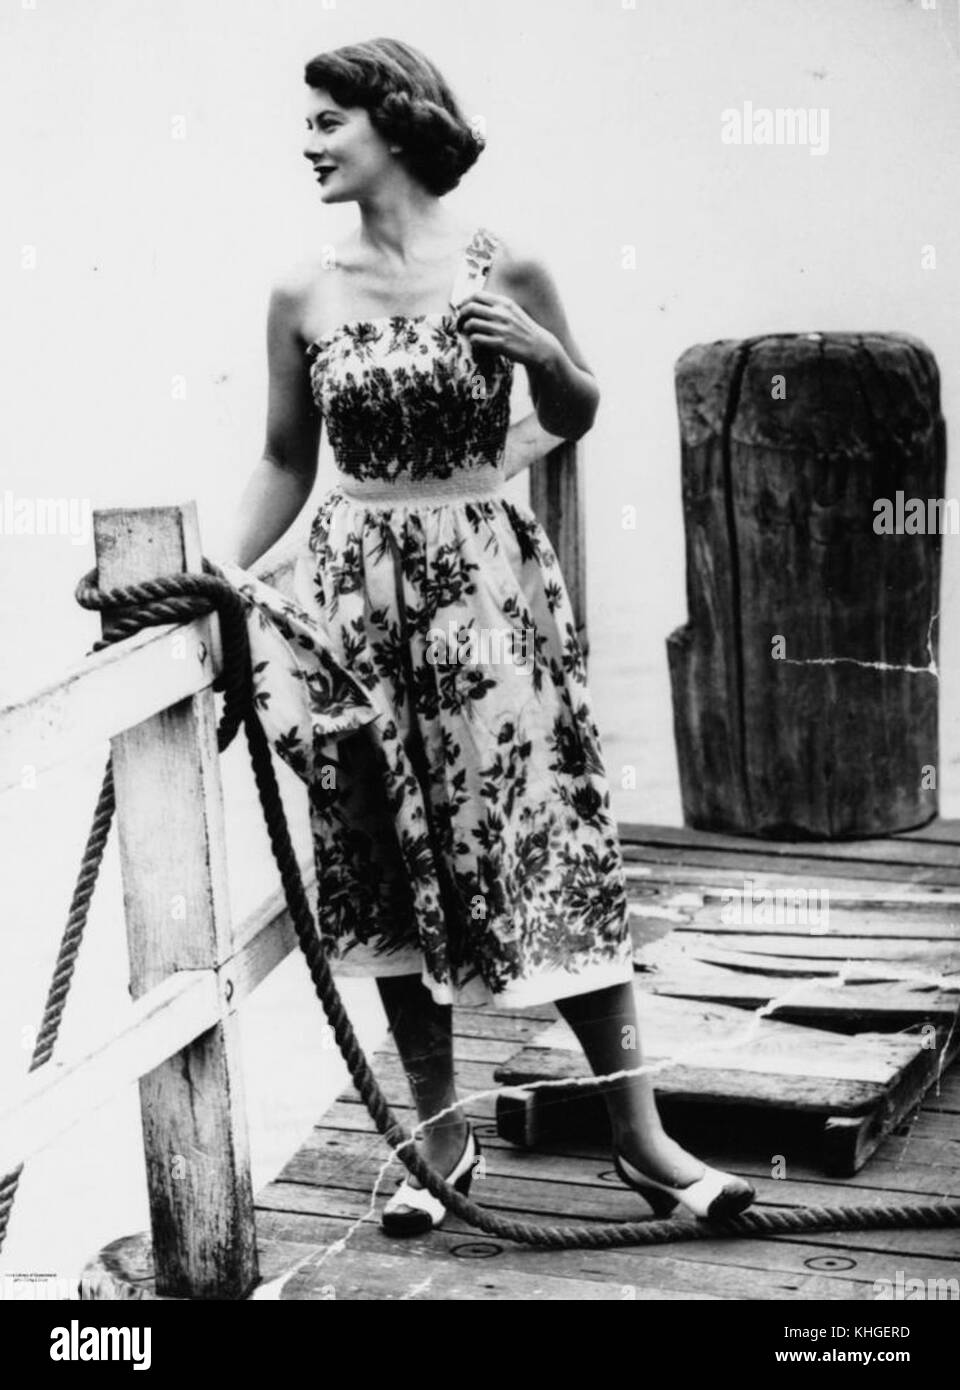 Buy GAESHOW 1950s Retro Dress Floral Printed Hepburn Sleeveless